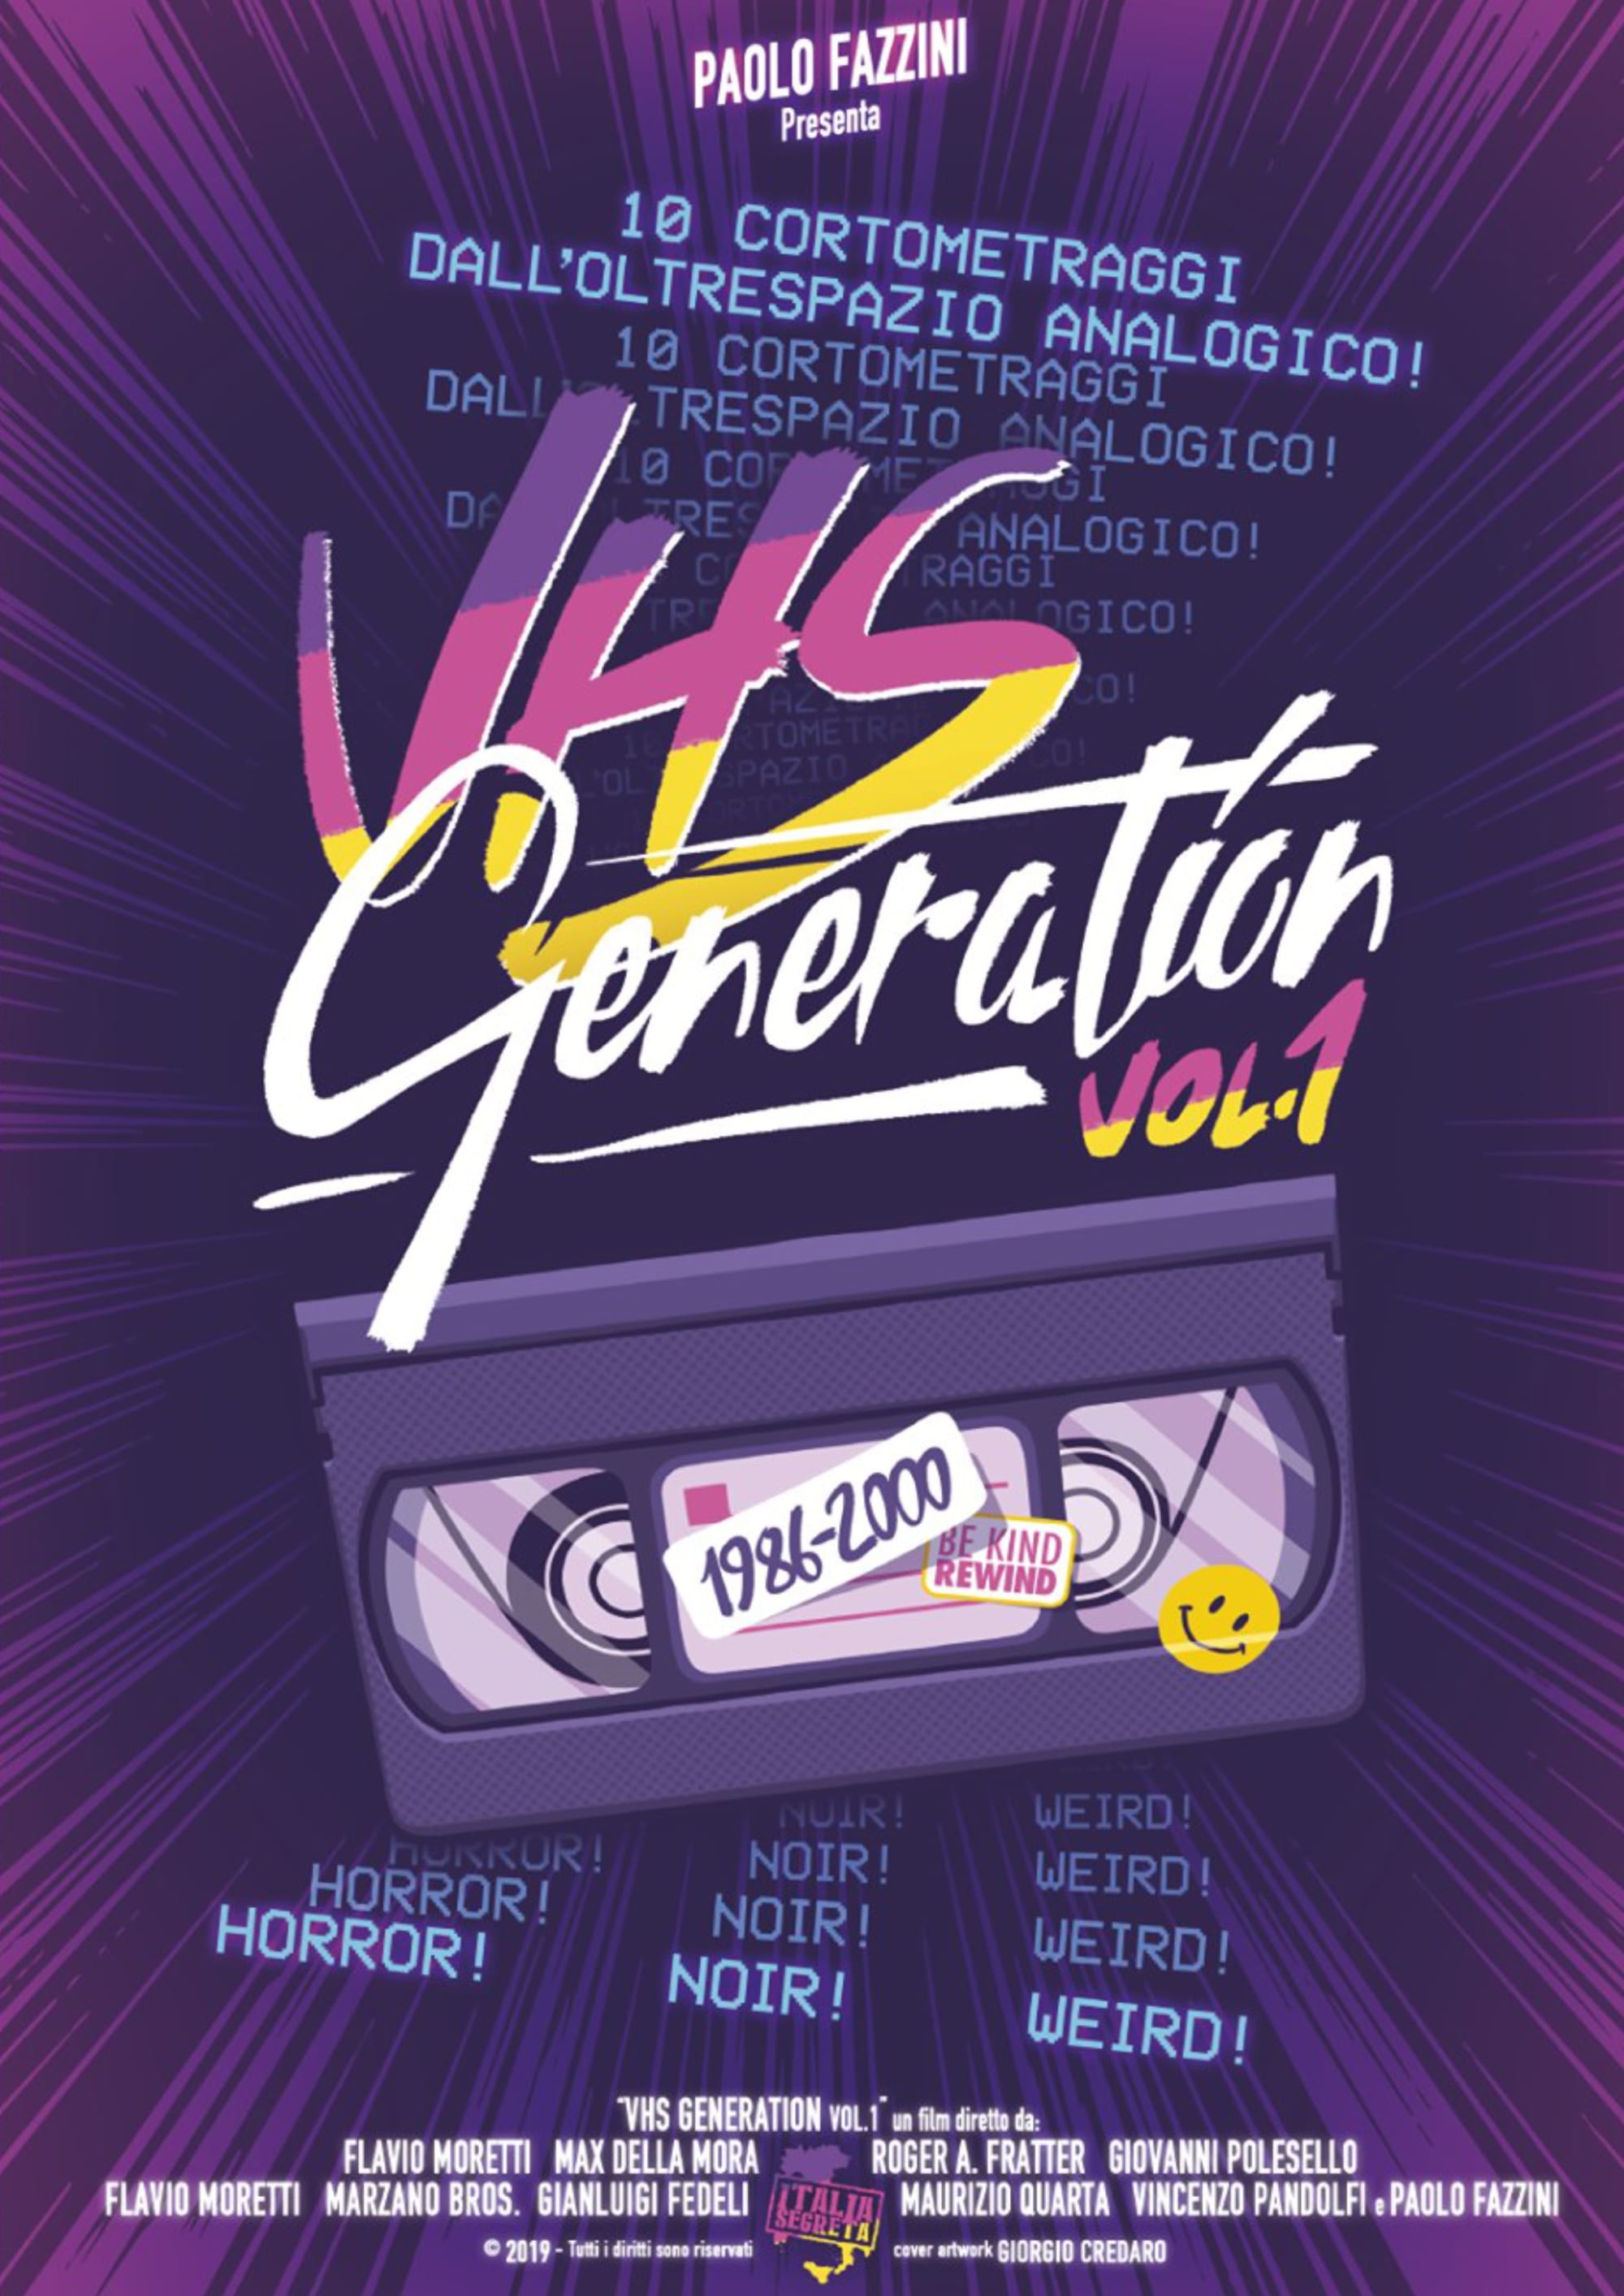 VHS Generation Vol.1